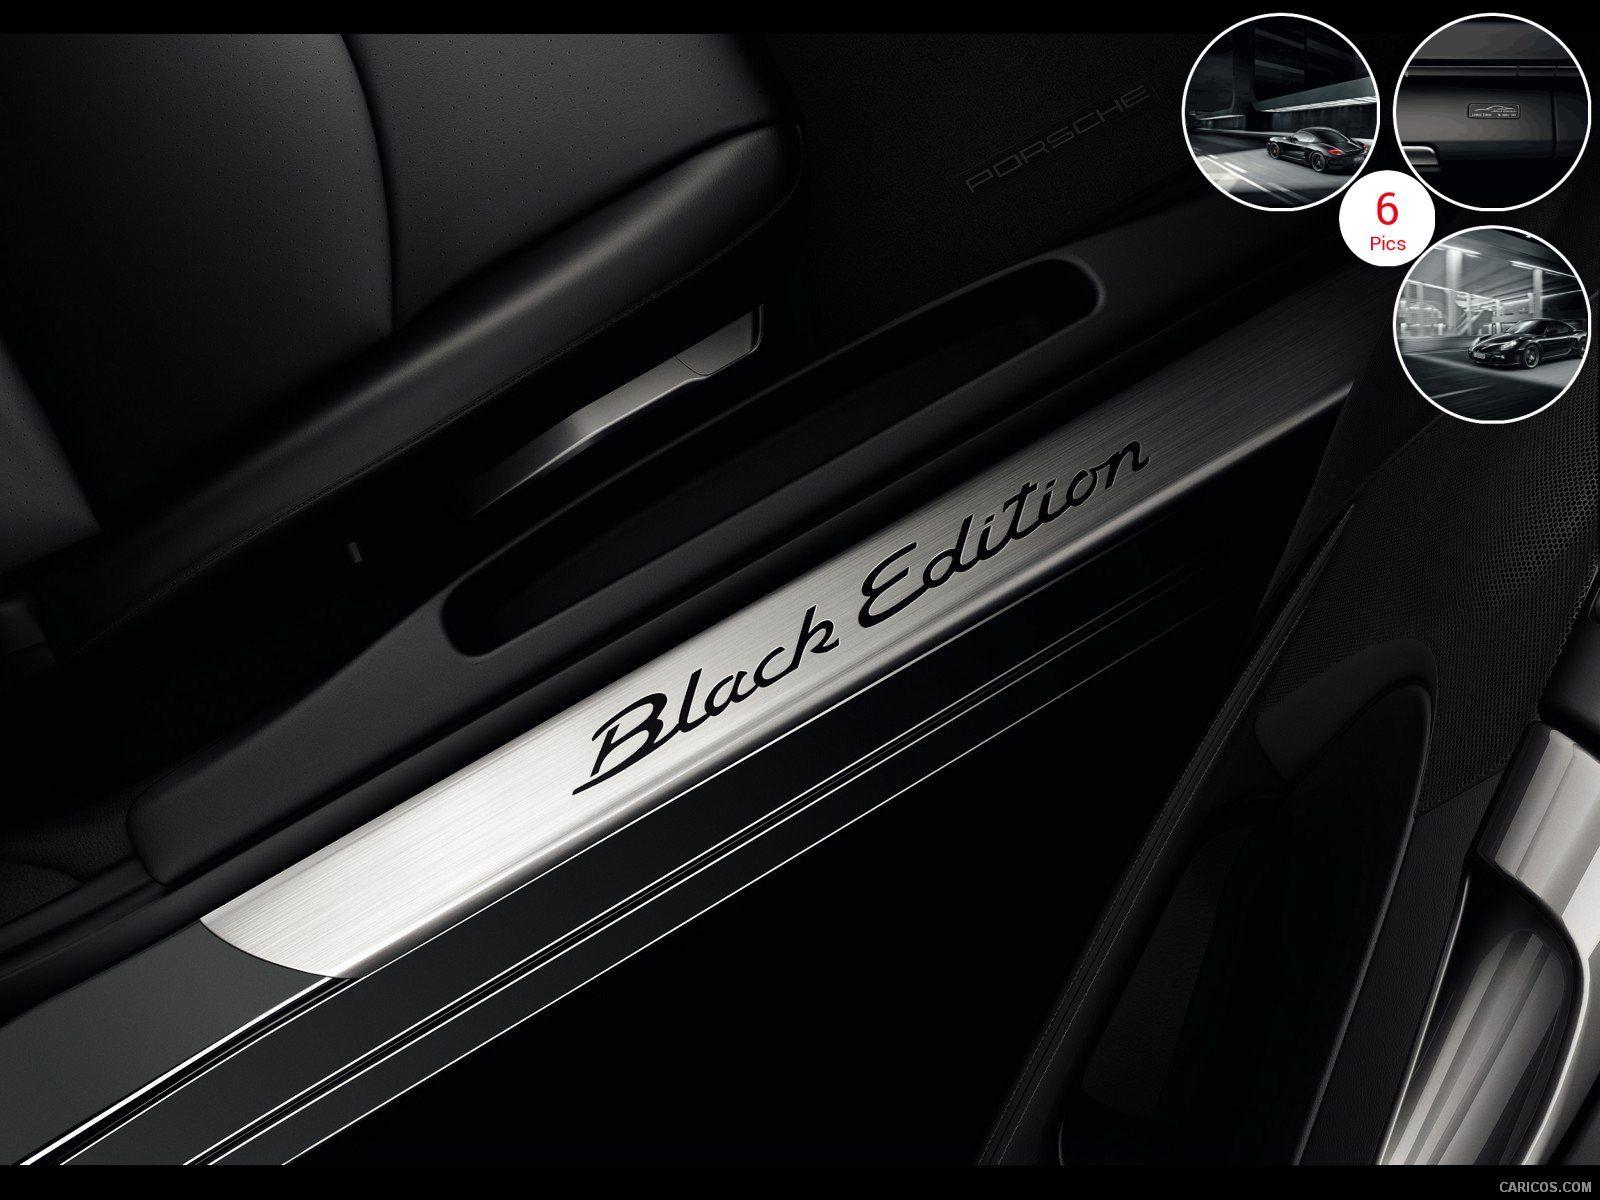 Porsche Cayman S Black Edition (2012). Wallpaper